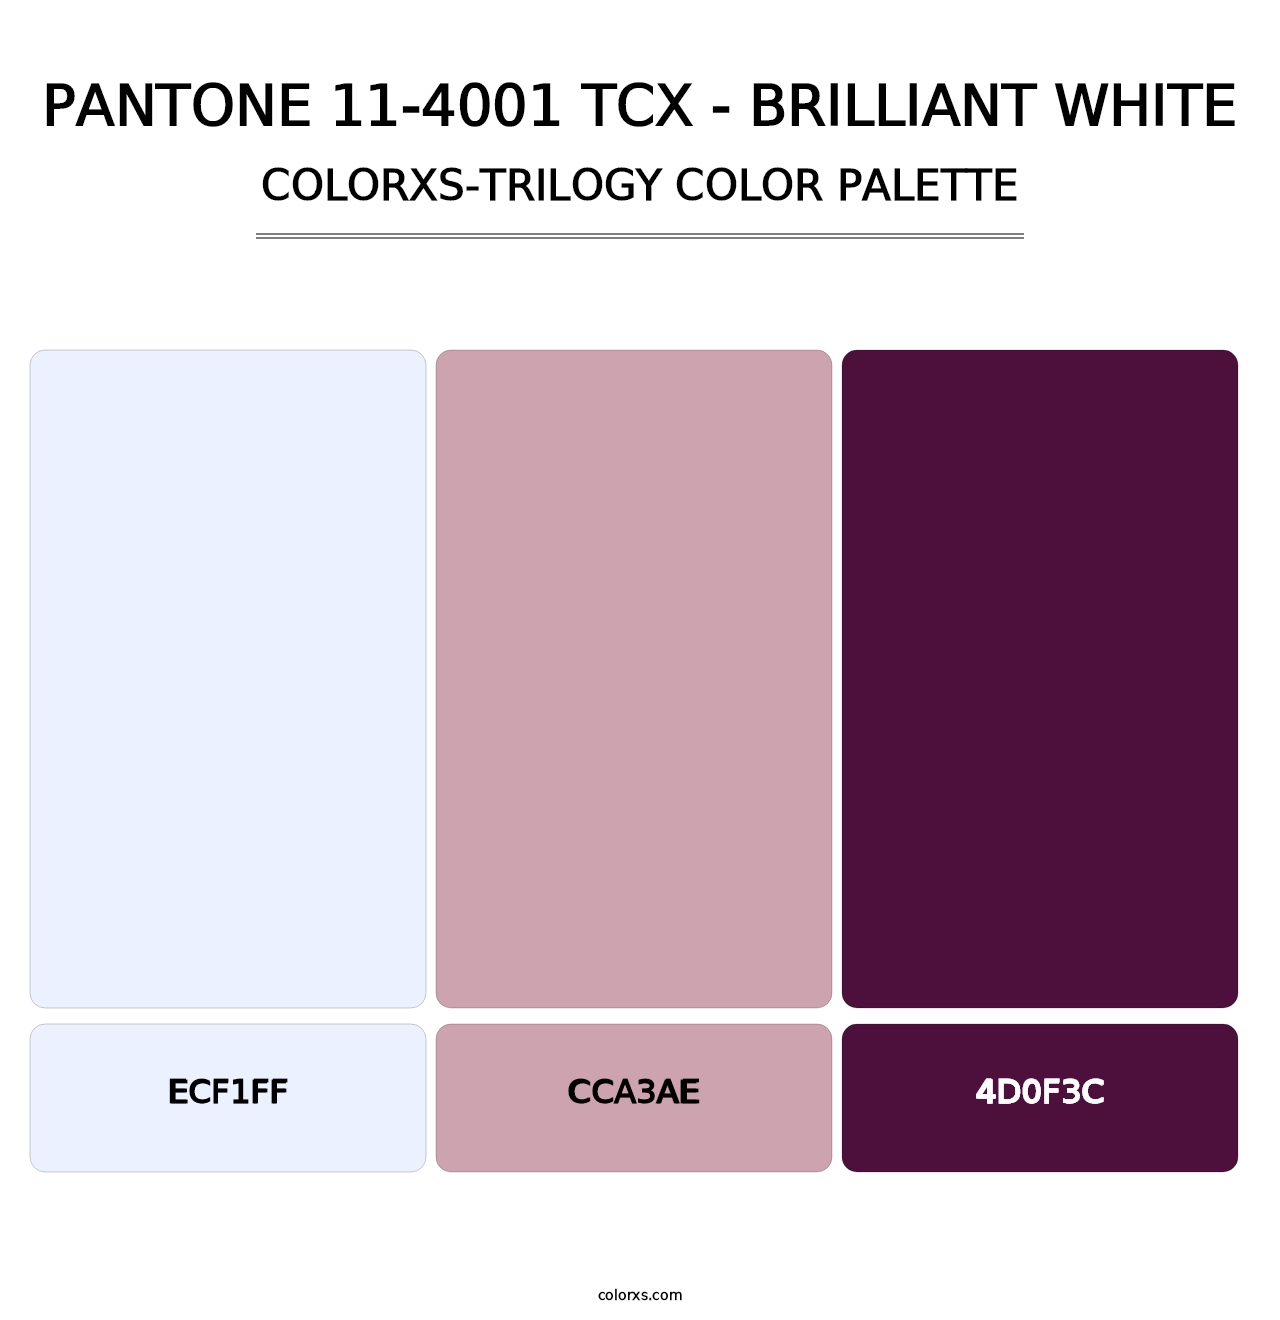 PANTONE 11-4001 TCX - Brilliant White - Colorxs Trilogy Palette